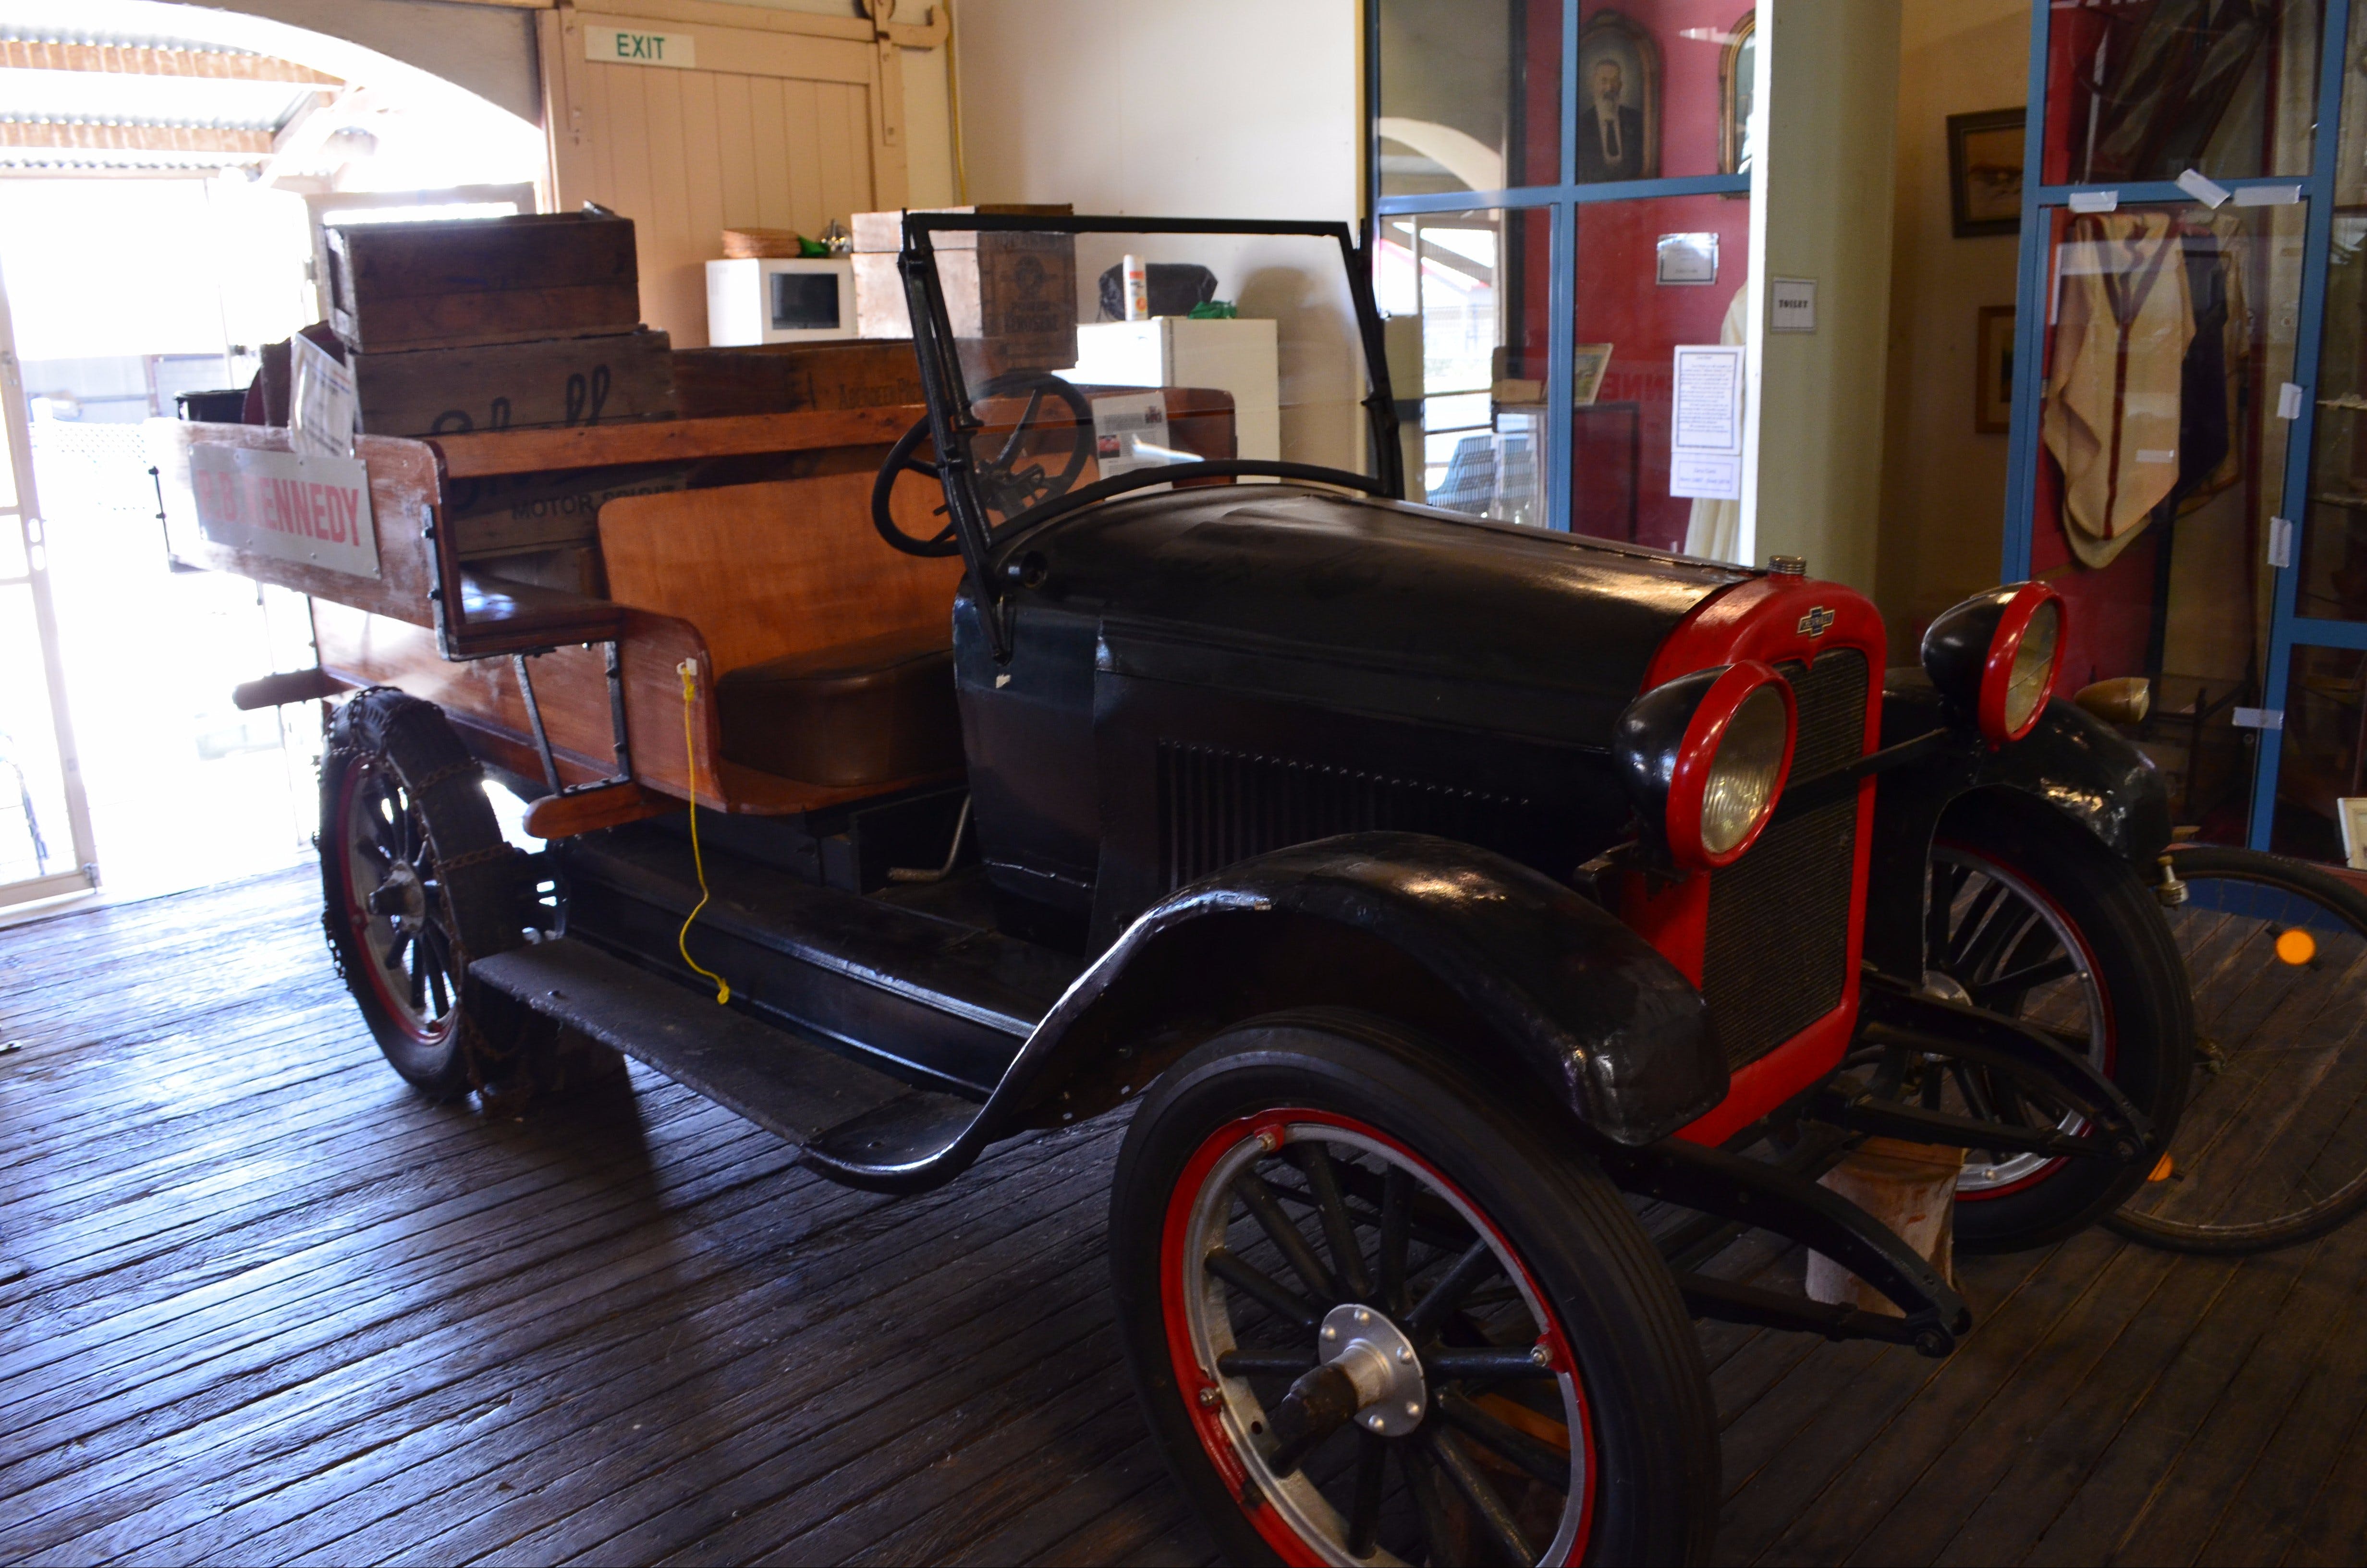 Zara Clark Museum - Accommodation Kalgoorlie